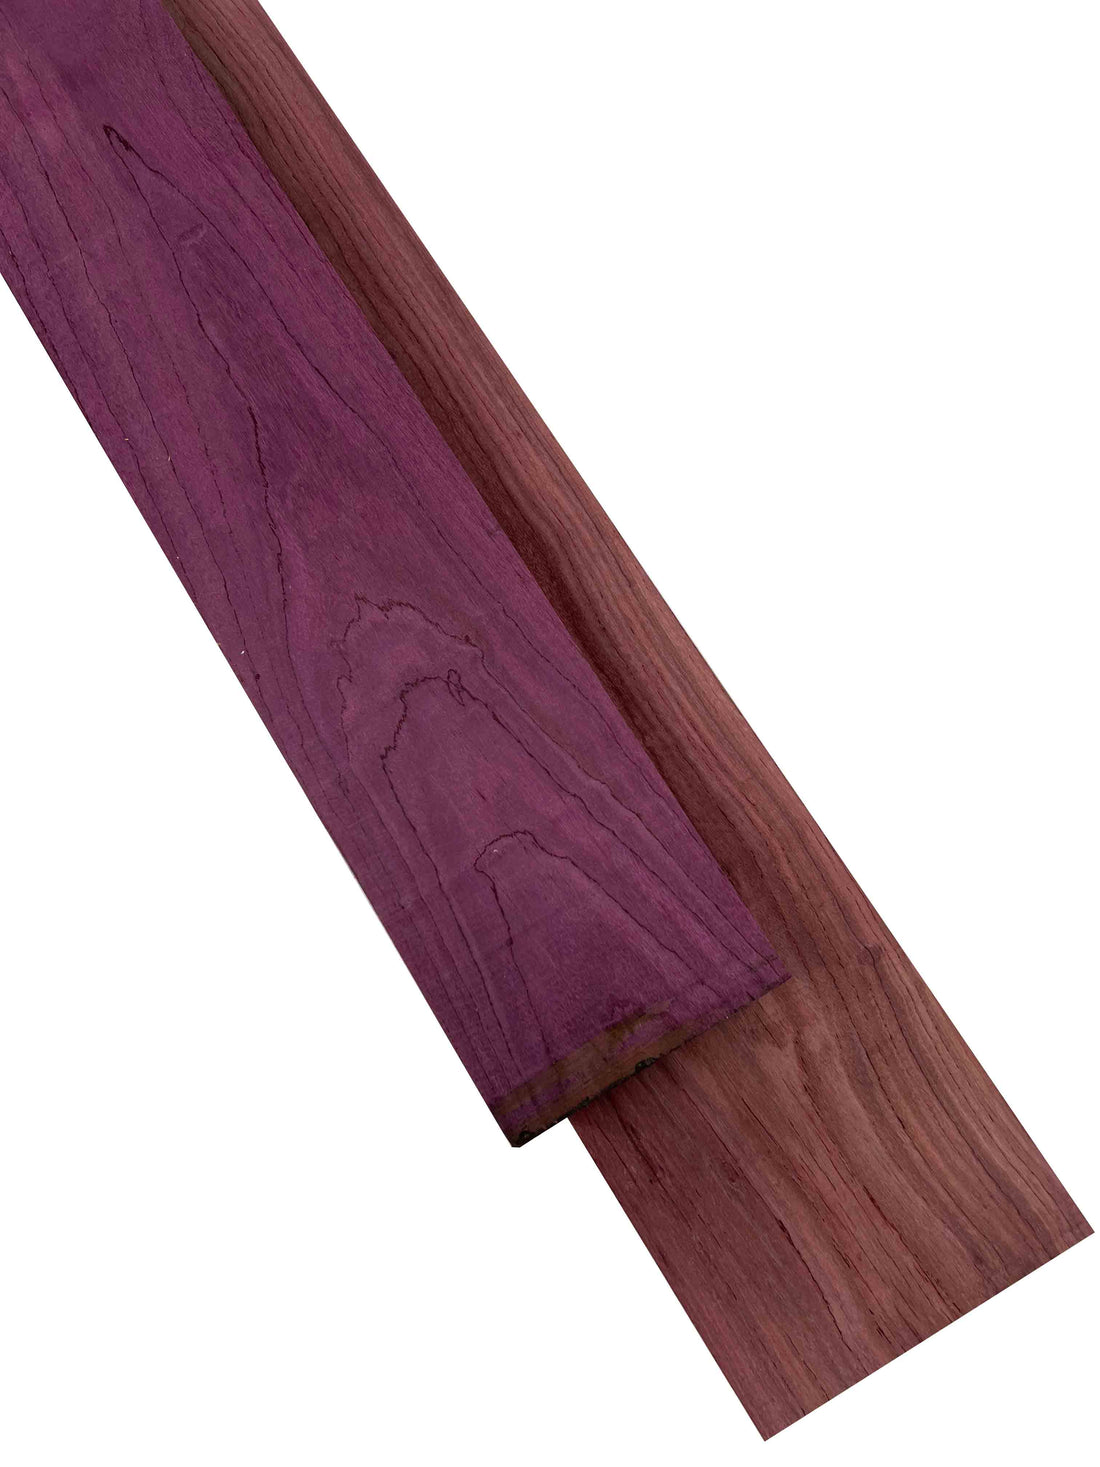 Premium Purpleheart 8/4 Lumber - Exotic Wood Zone - Buy online Across USA 